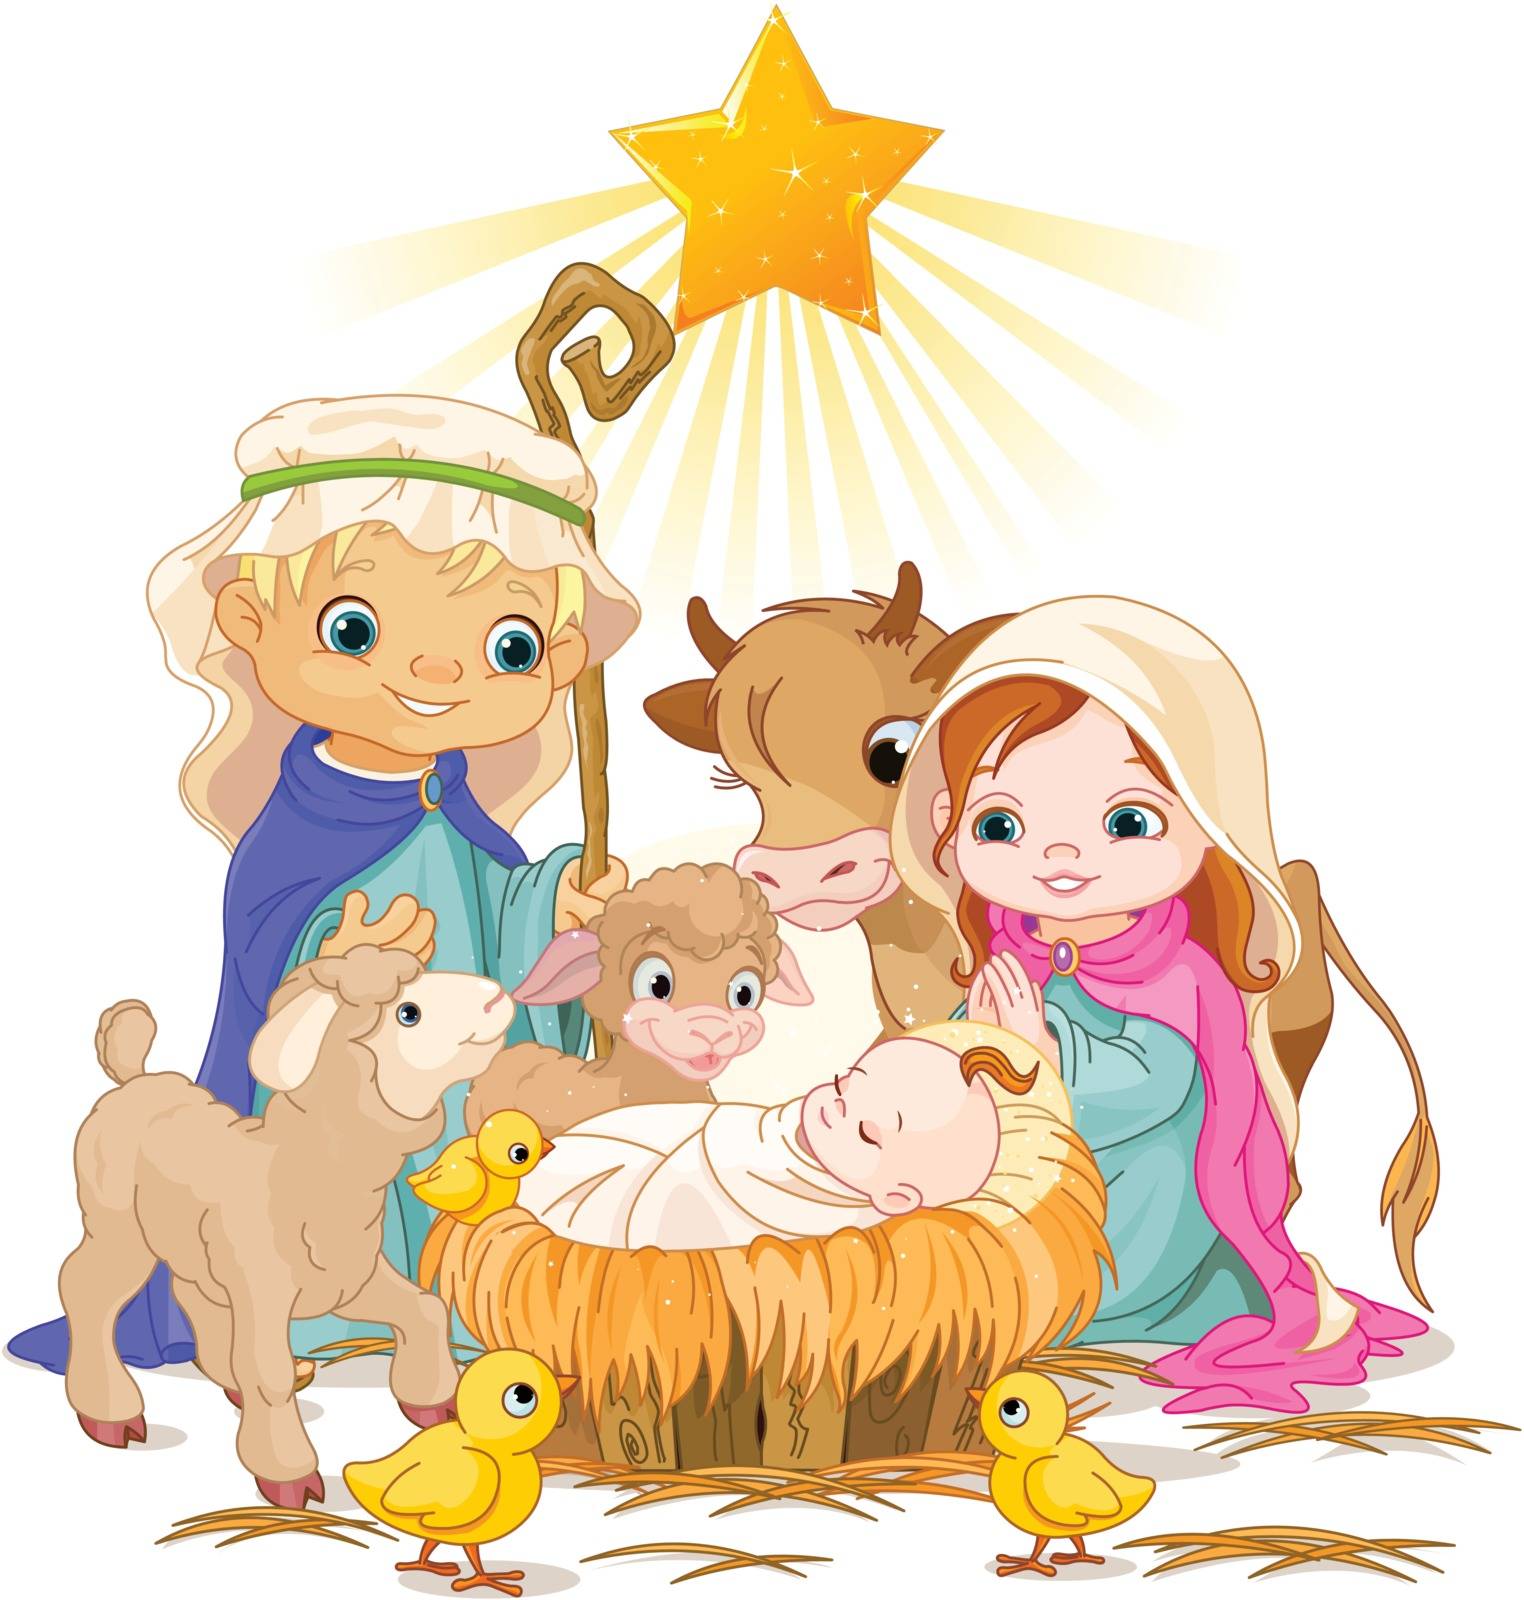 Christmas nativity scene with holy family.